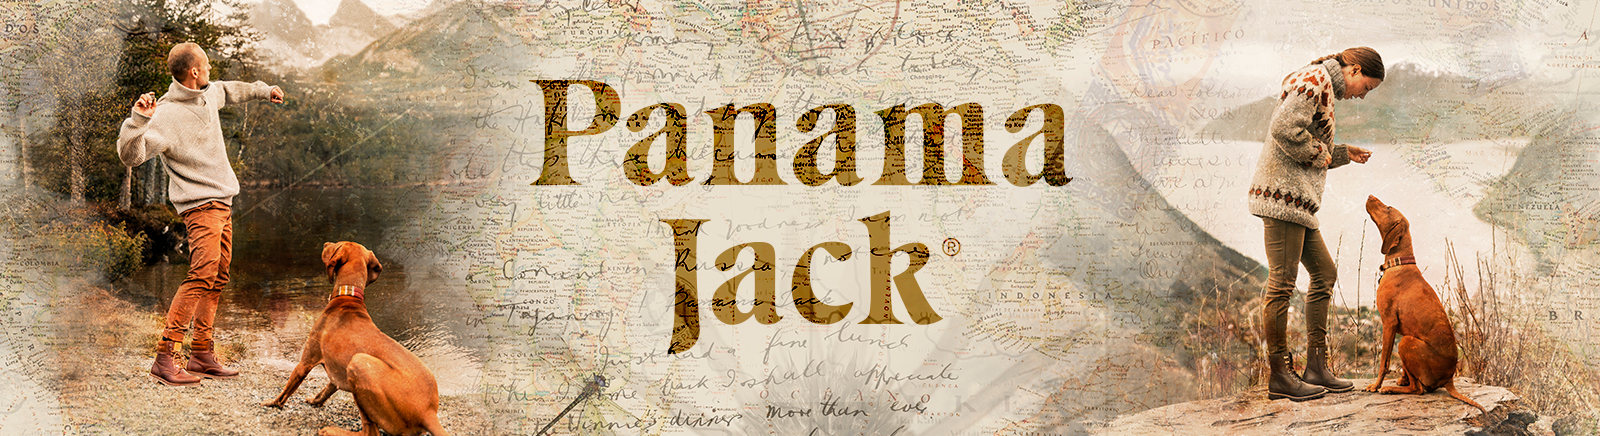 Prange: Panama Jack Halbschuhe für Herren online shoppen